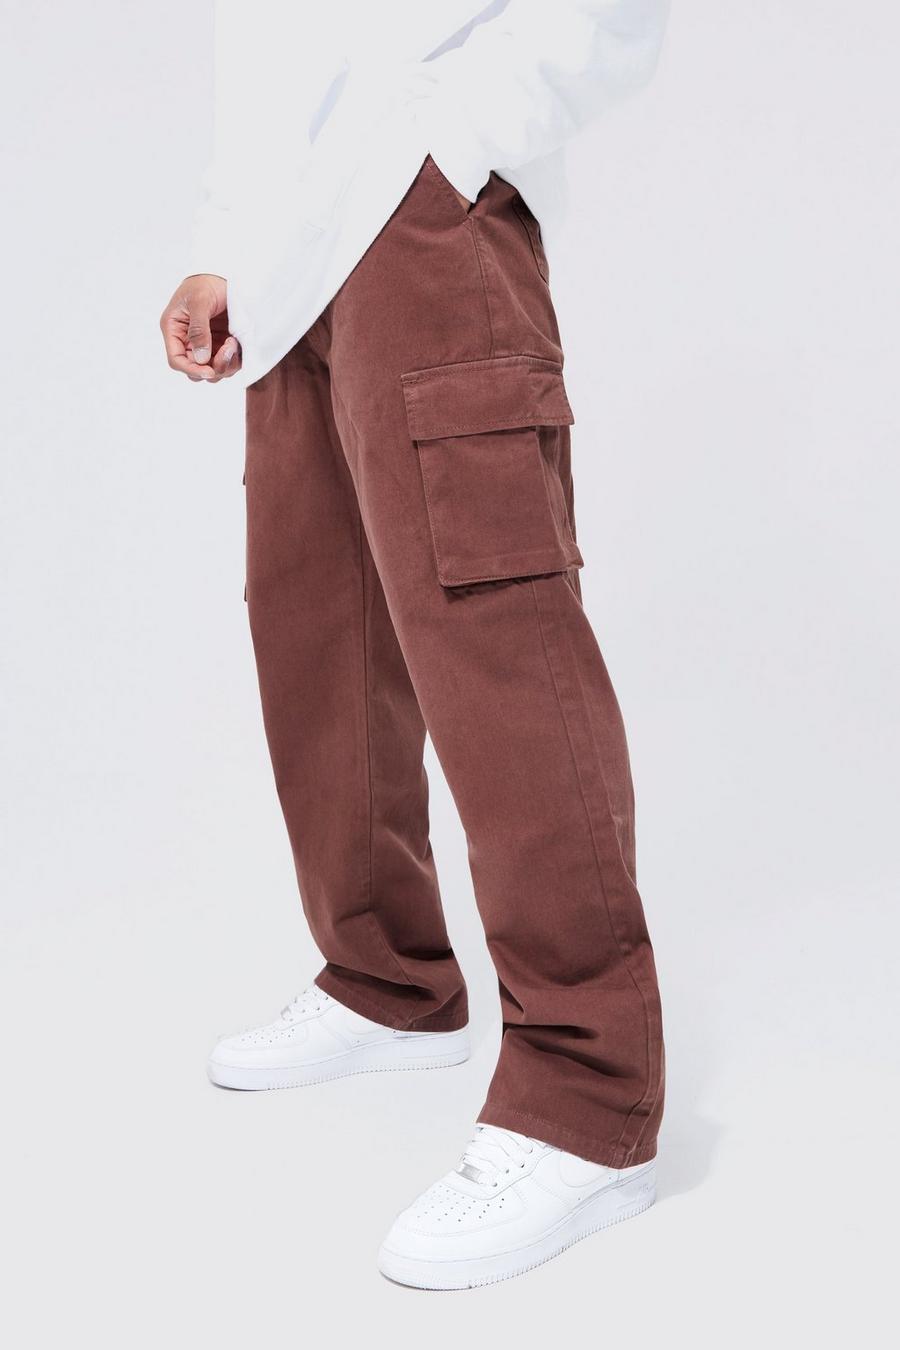 Pantaloni Chino stile Cargo rilassati, Chocolate marrone